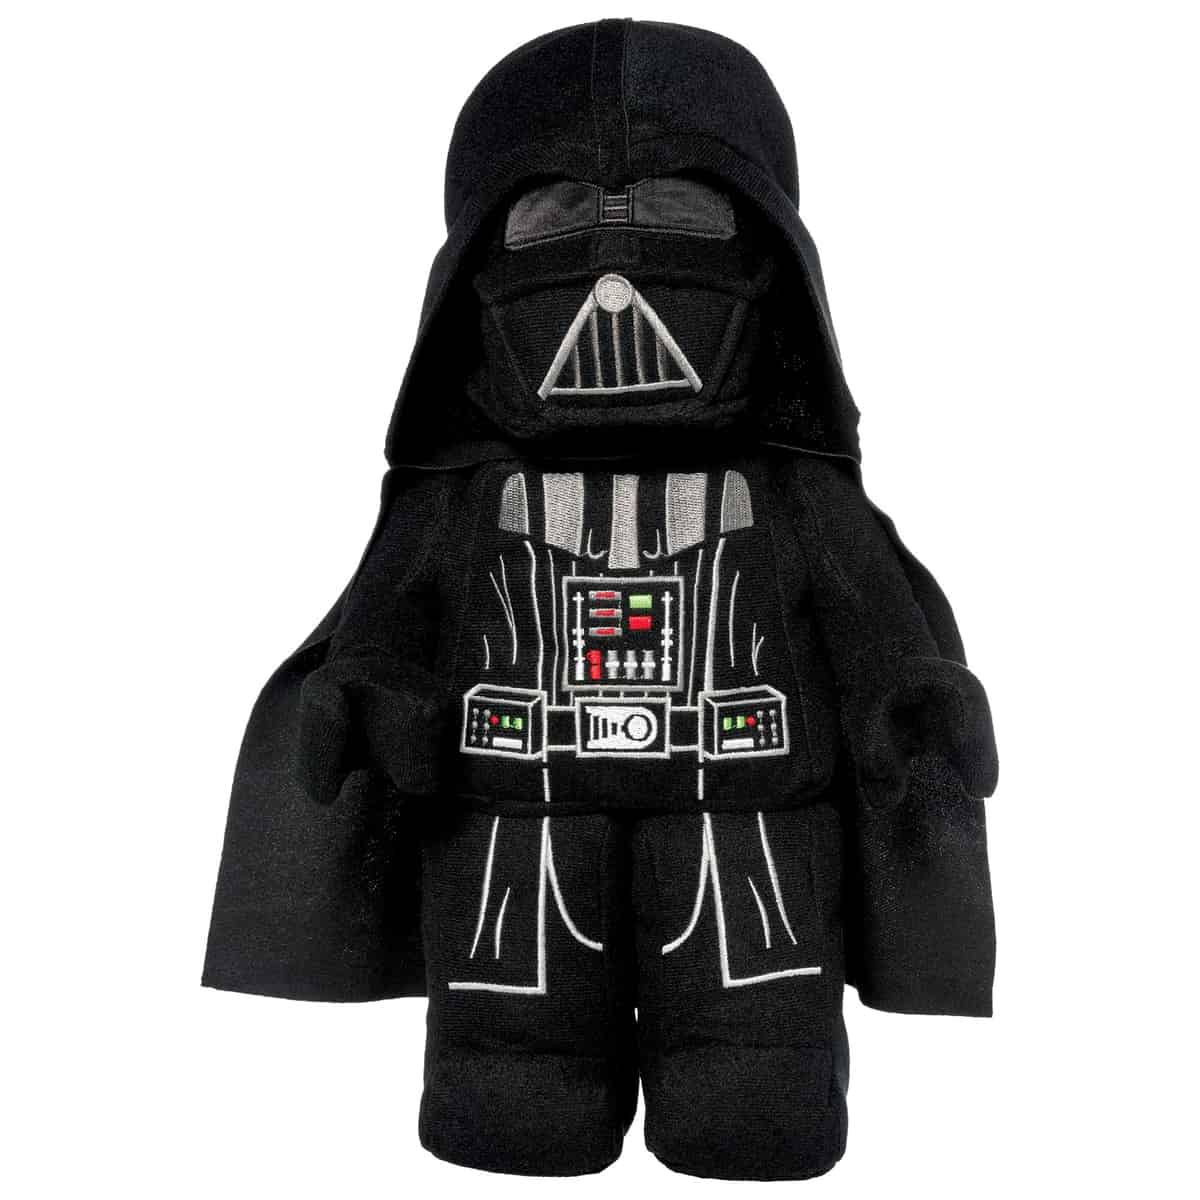 Darth Vader Plush 5007136